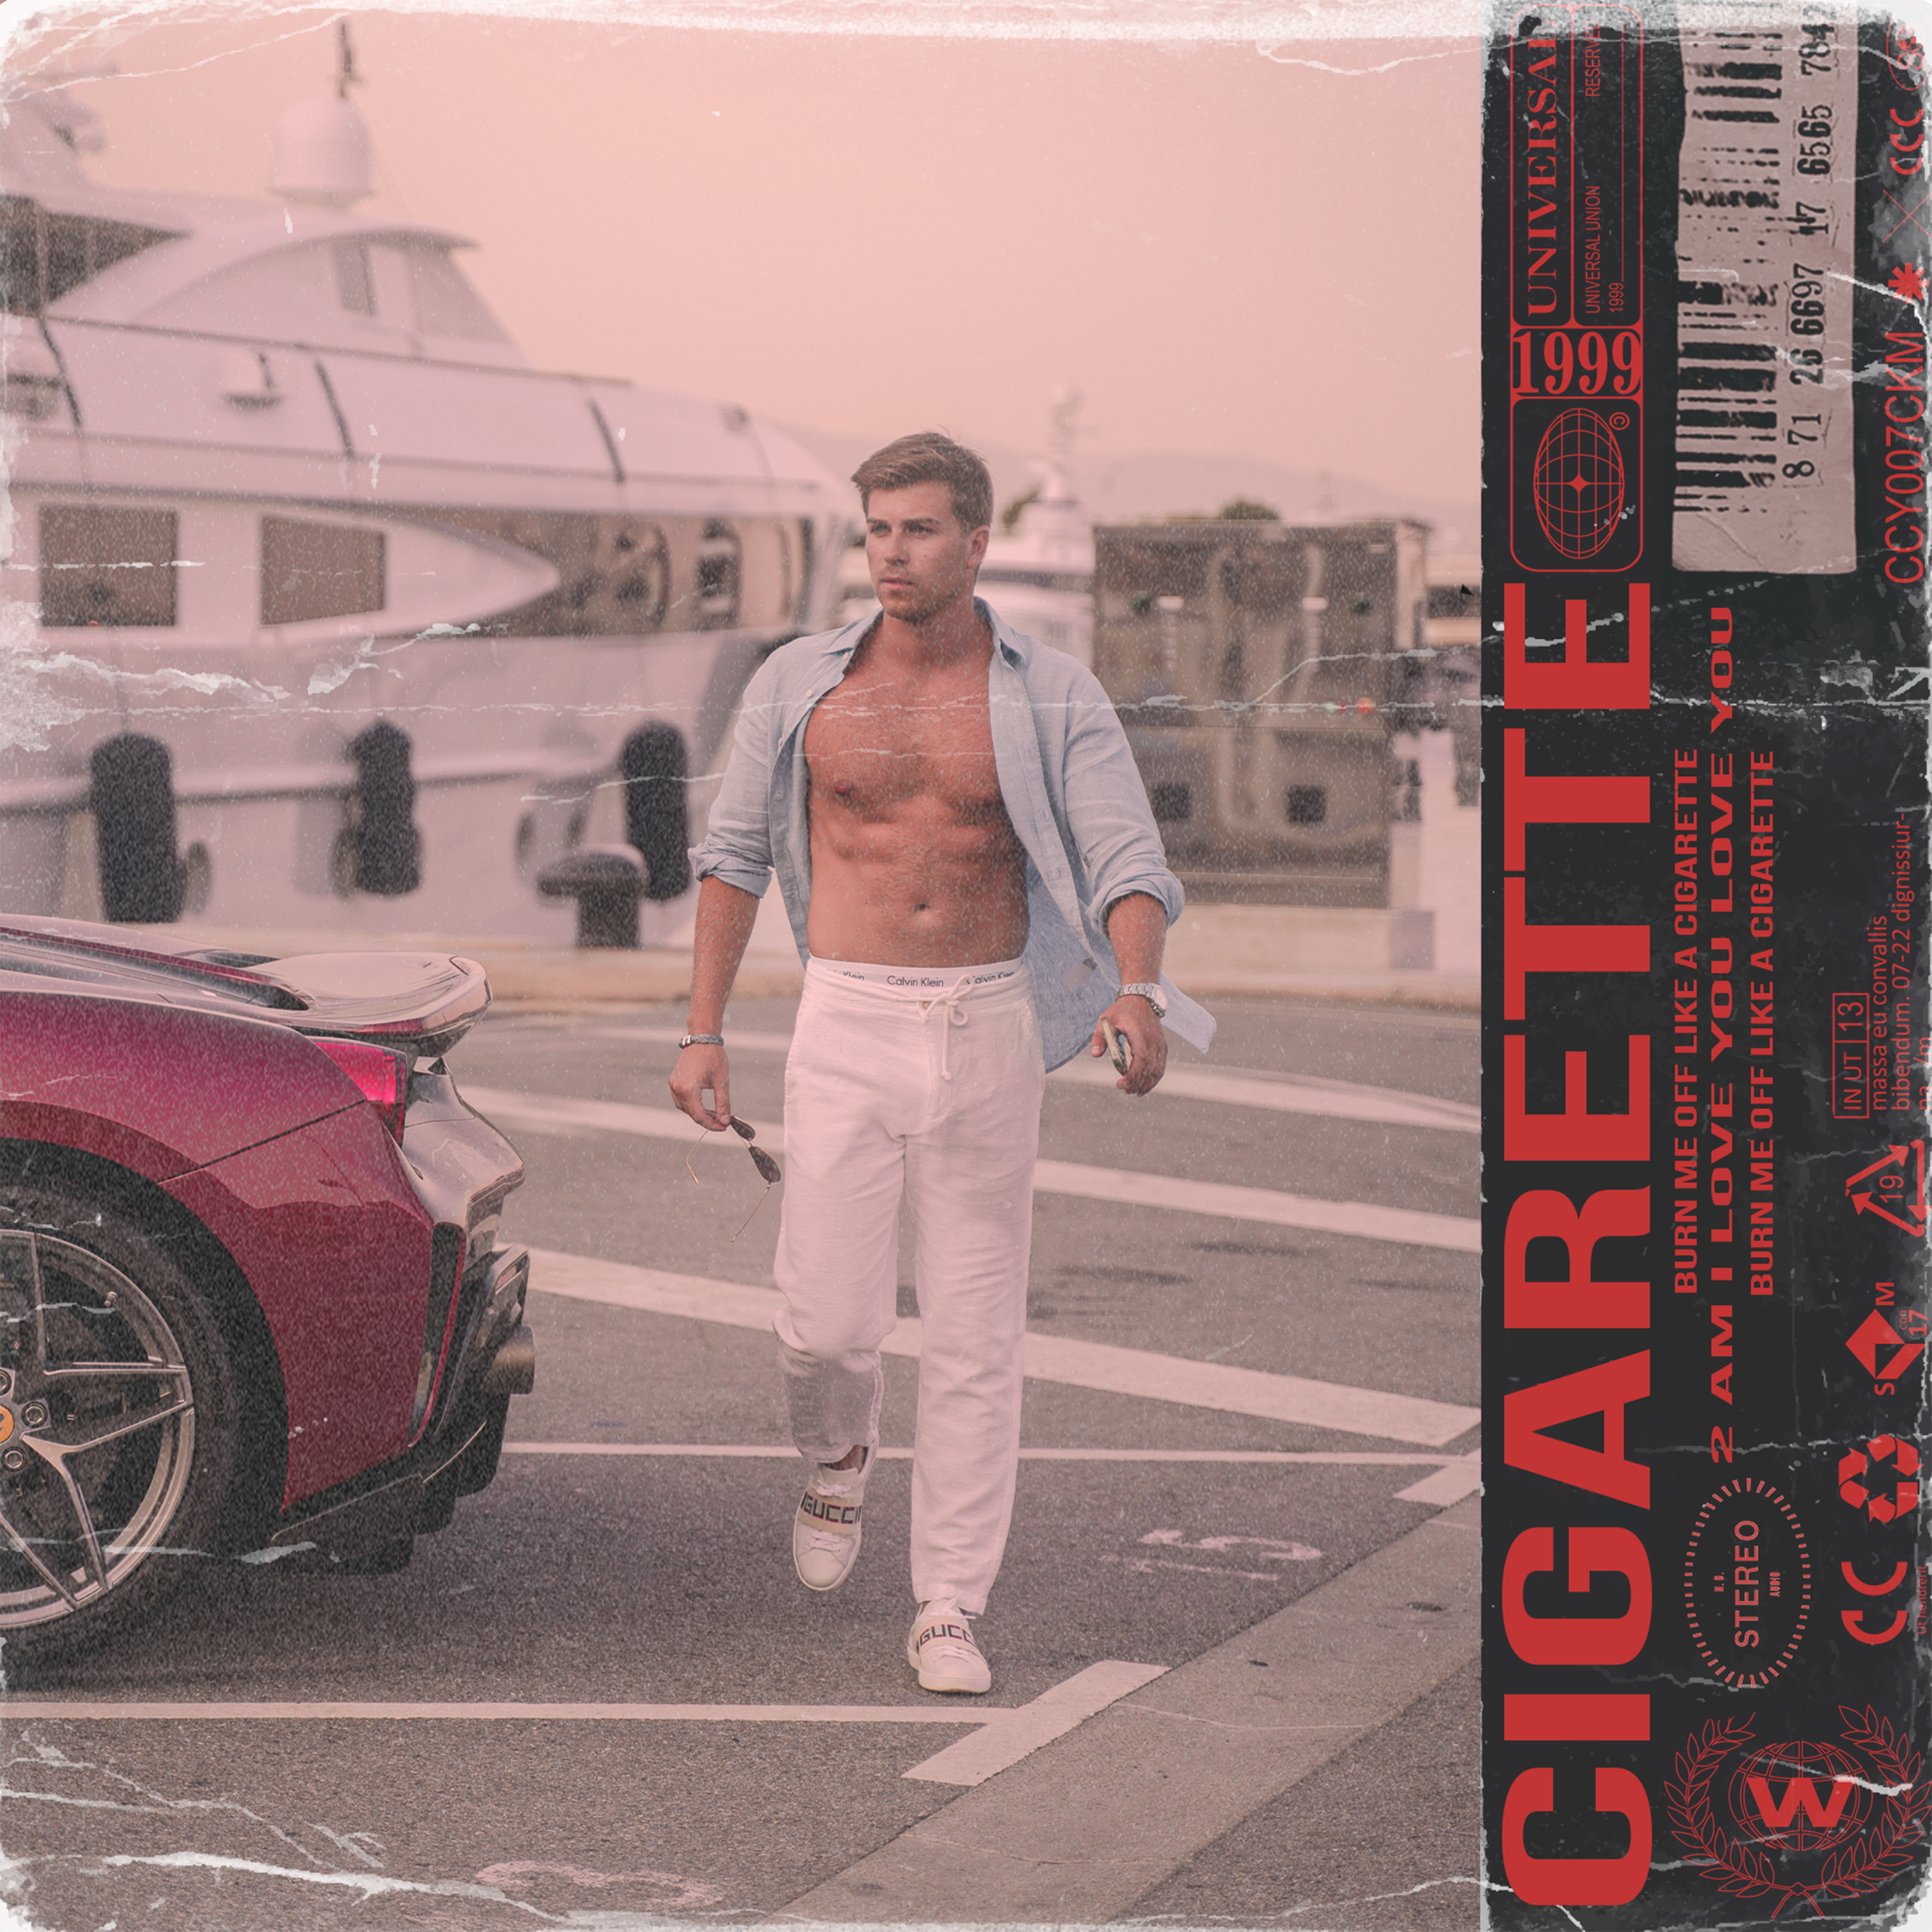 Monaco Singer Josh Stanley Unveils new song "Cigarette"